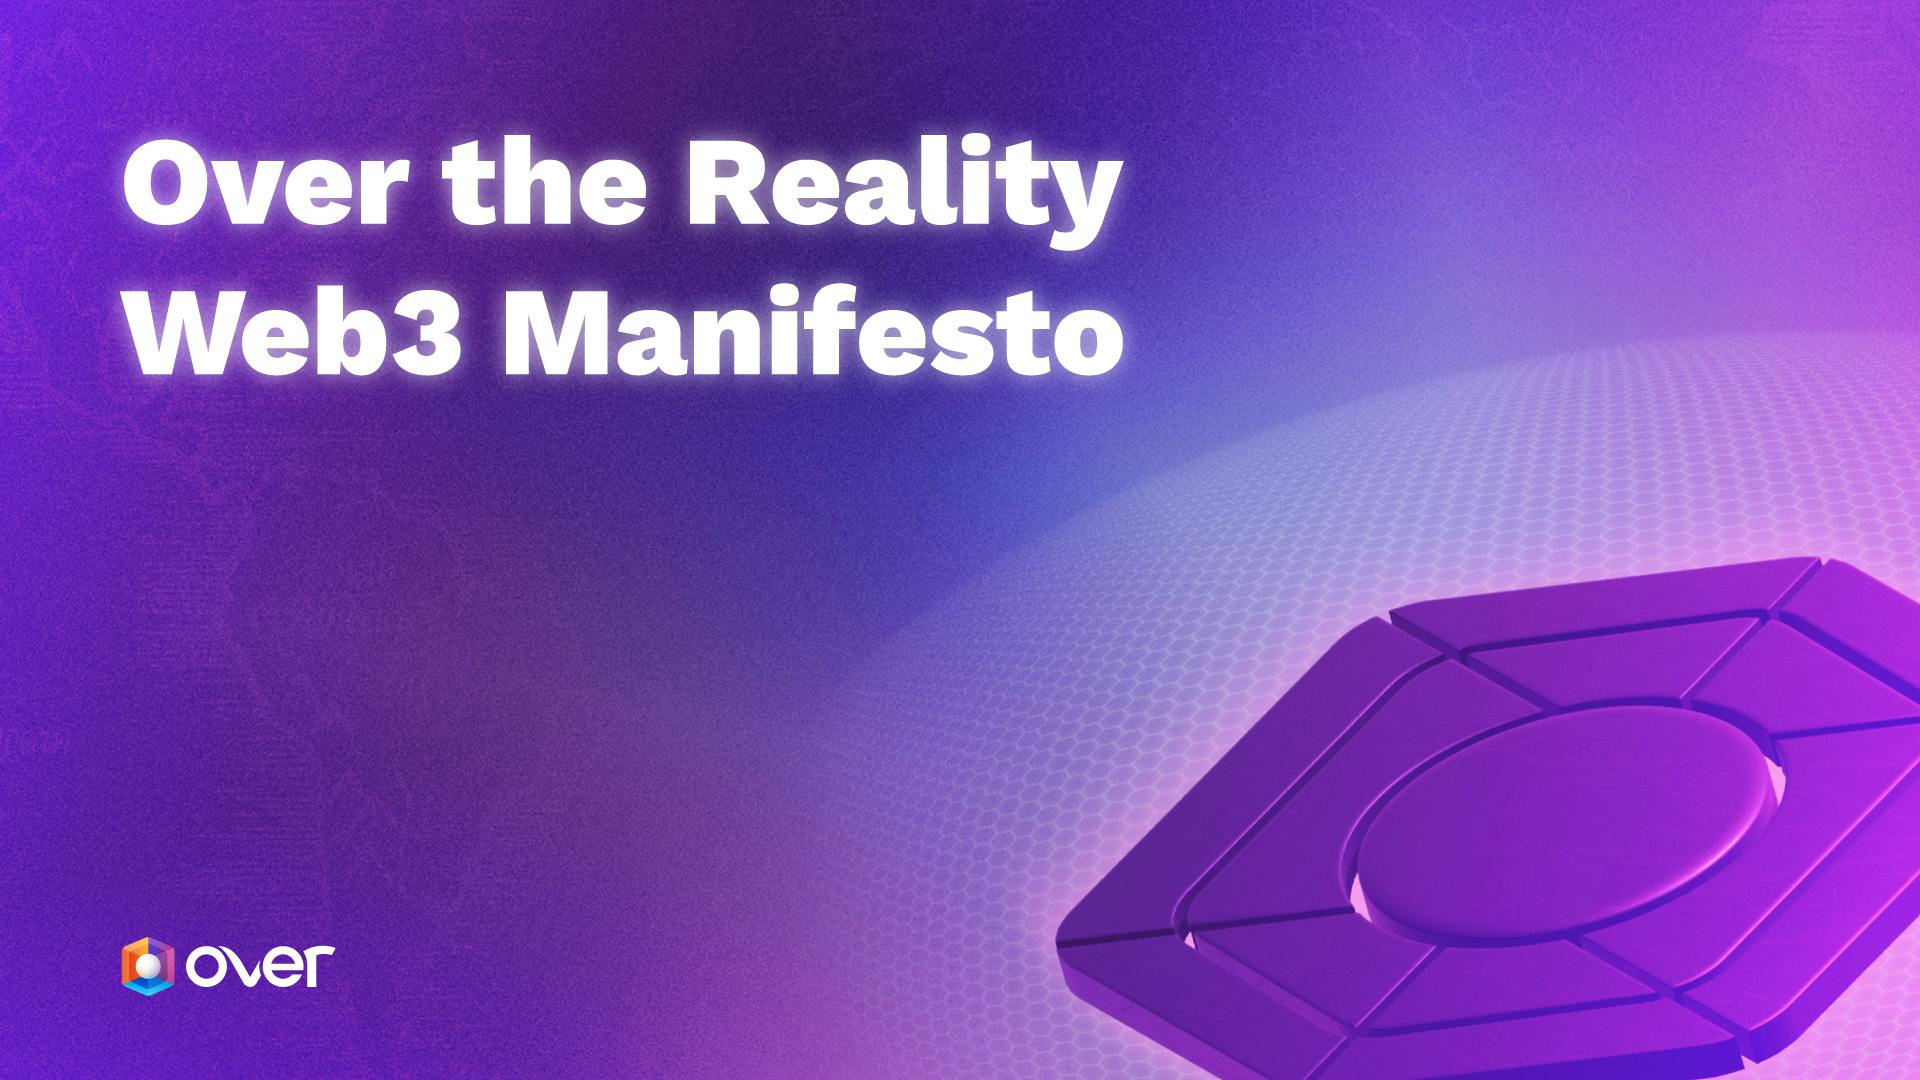 Over the Reality Web3 Manifesto